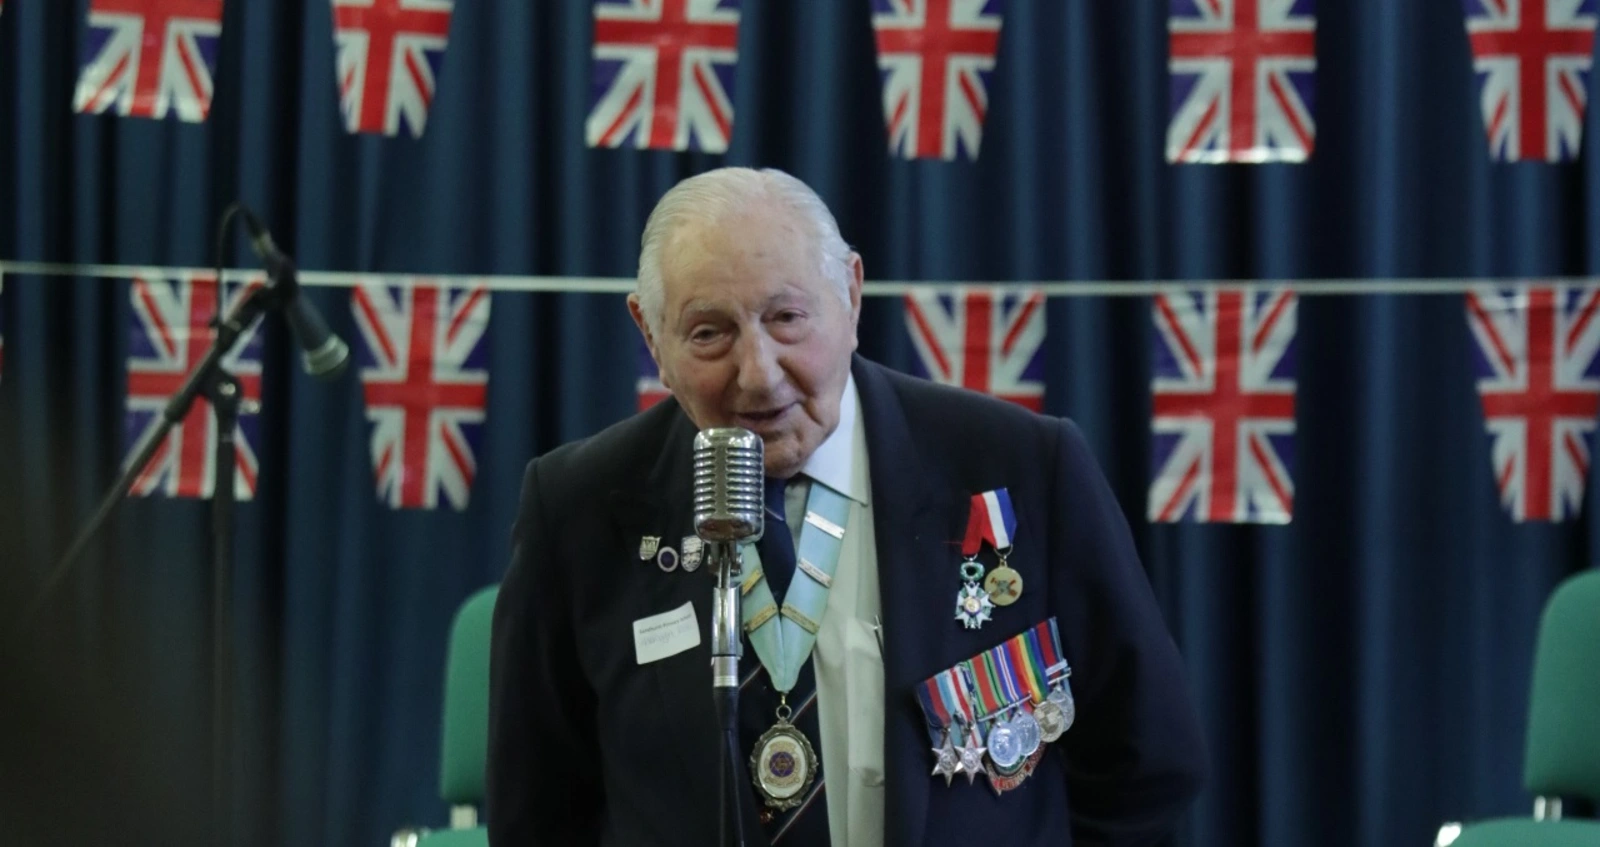 WW2 veteran speaking at an event